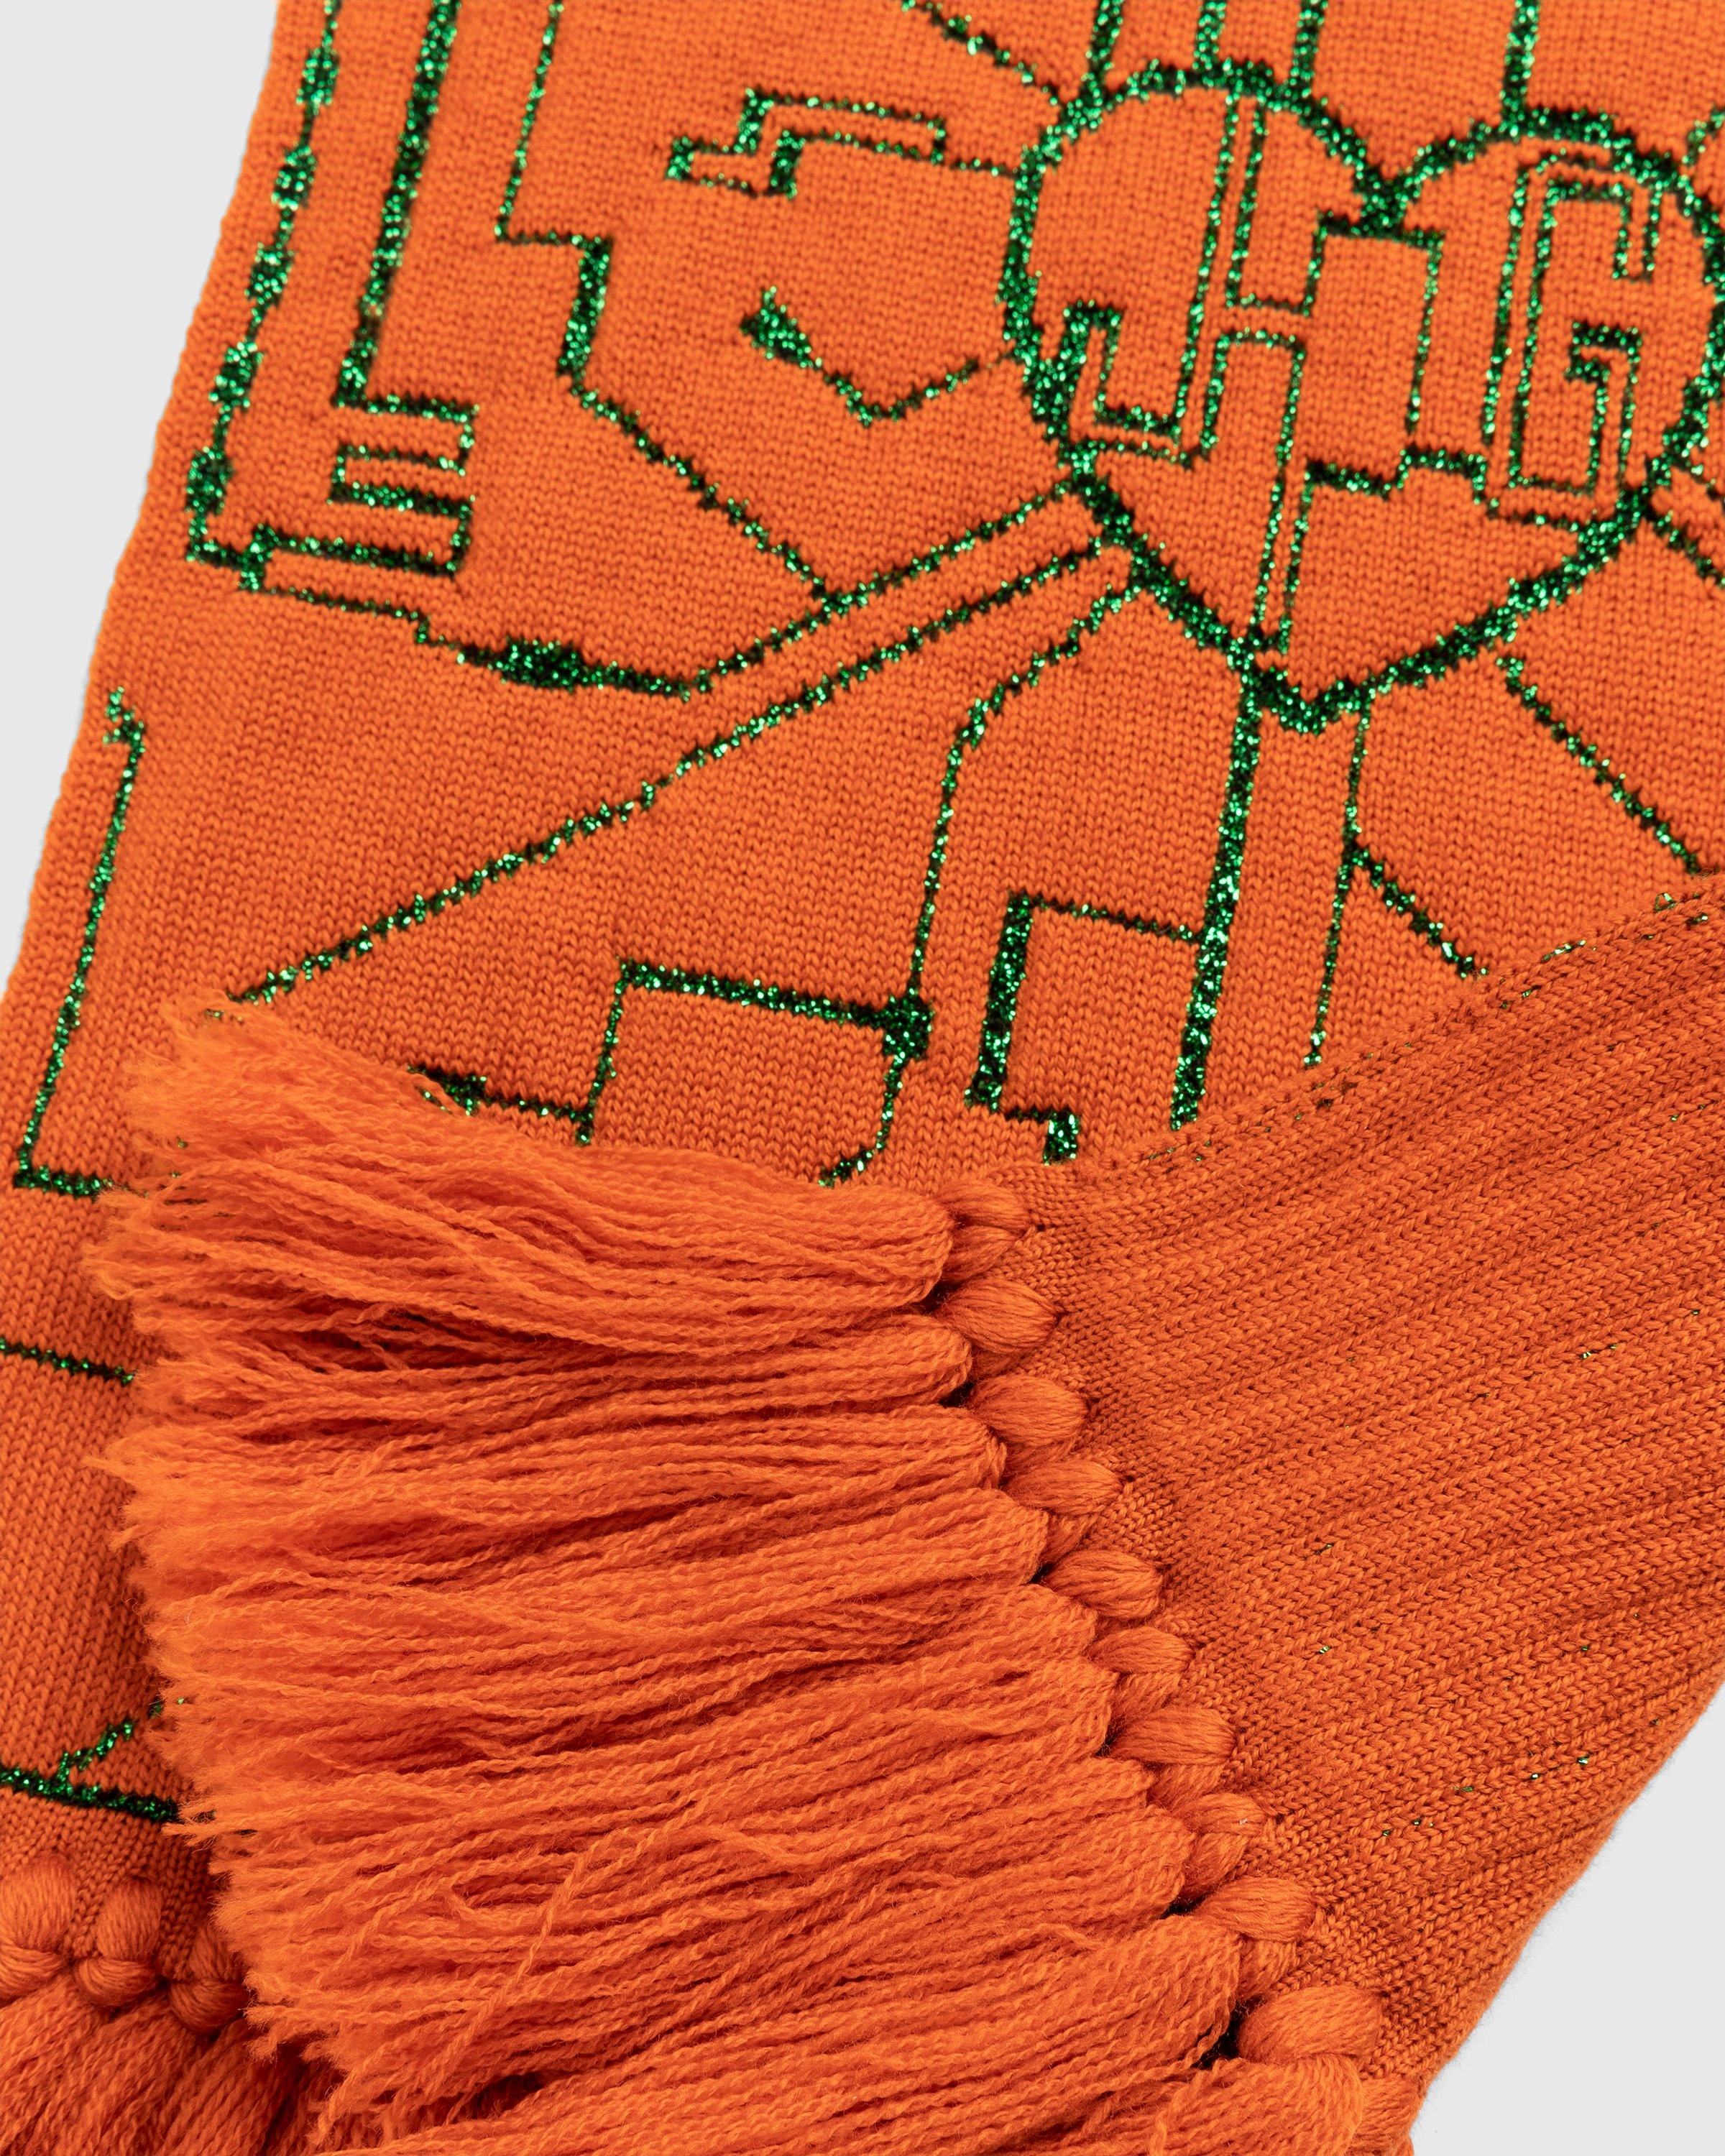 Jean Paul Gaultier – Scarf - Scarves - Orange - Image 7